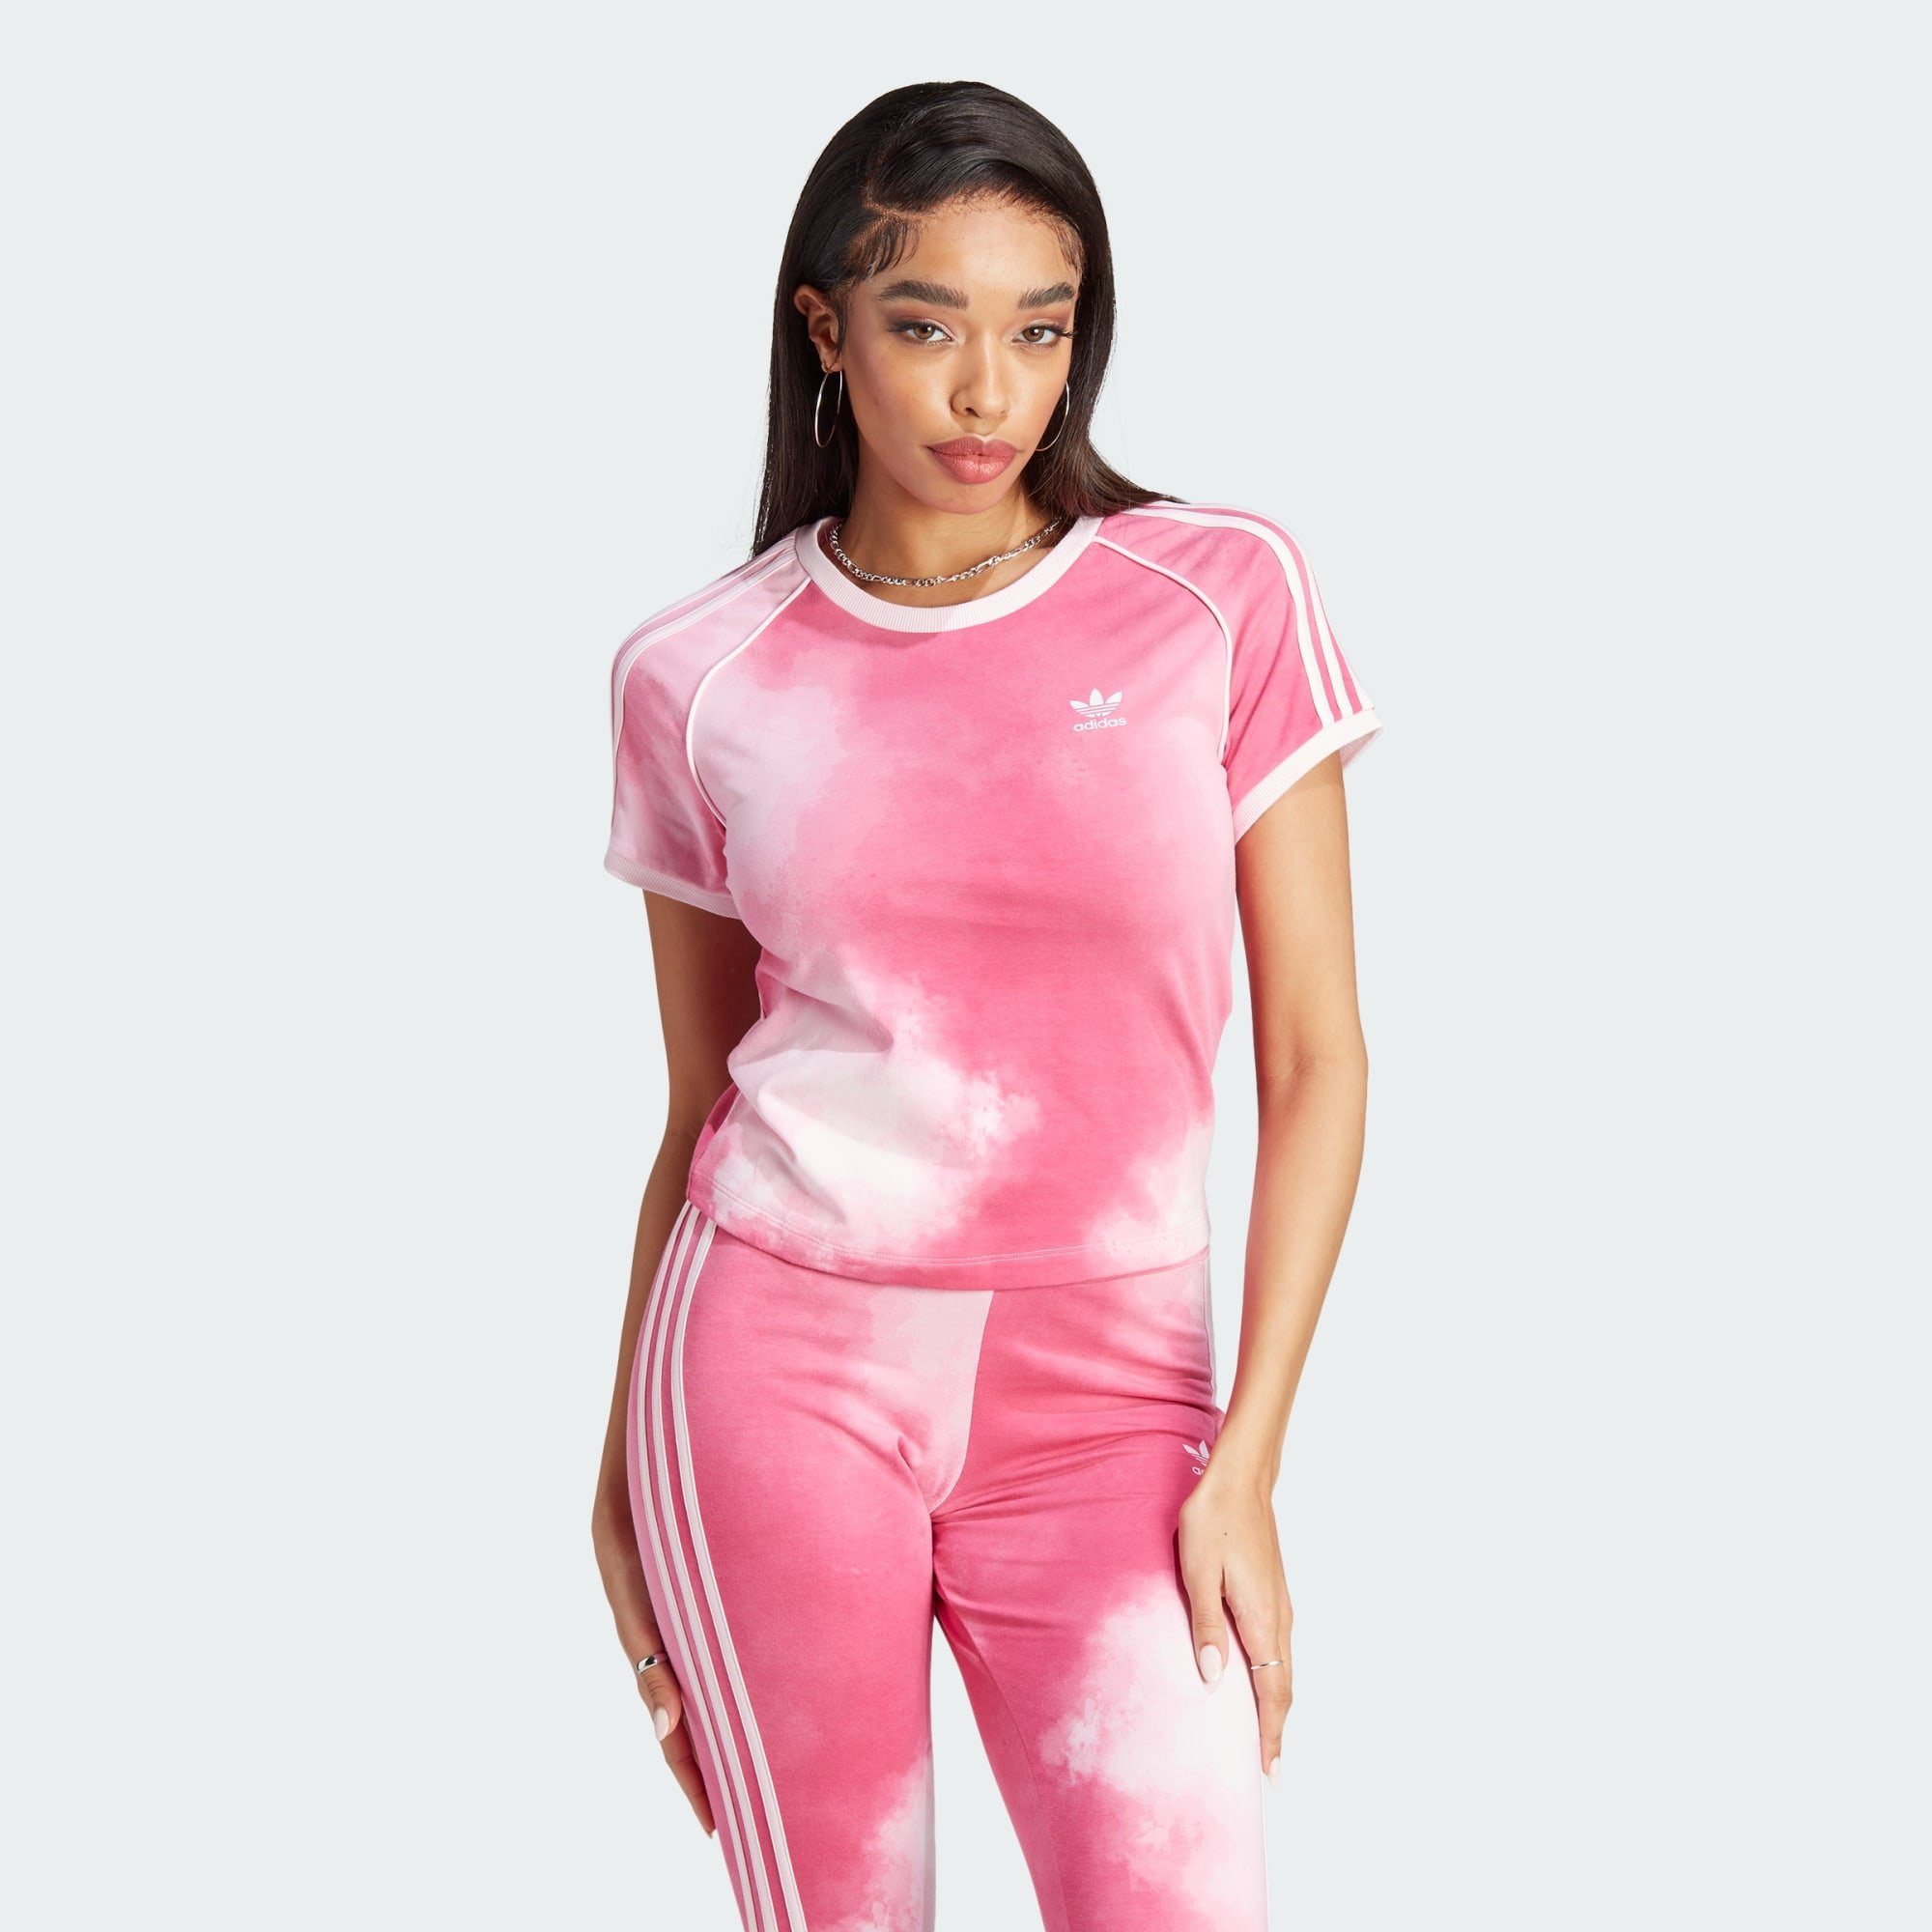 3-STREIFEN COLOUR Originals / Pink FADE adidas T-Shirt T-SHIRT Clear Multicolor